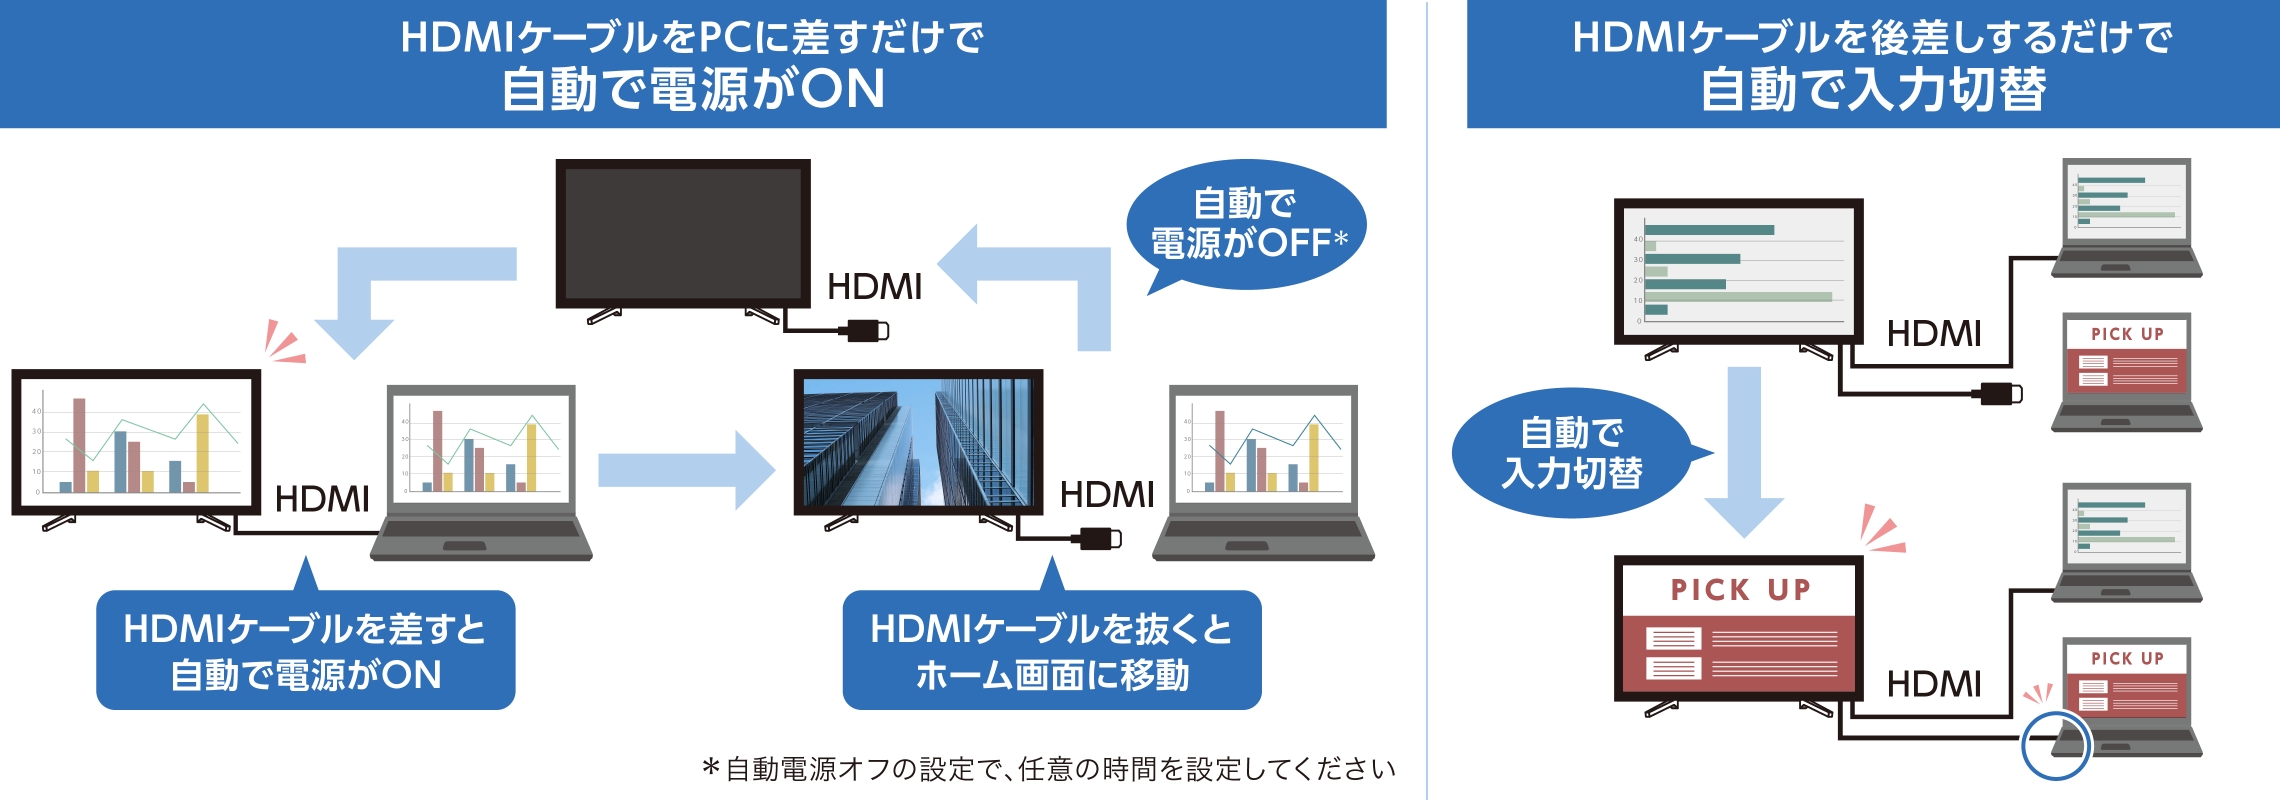 HDMI入力の自動切替の機能図1